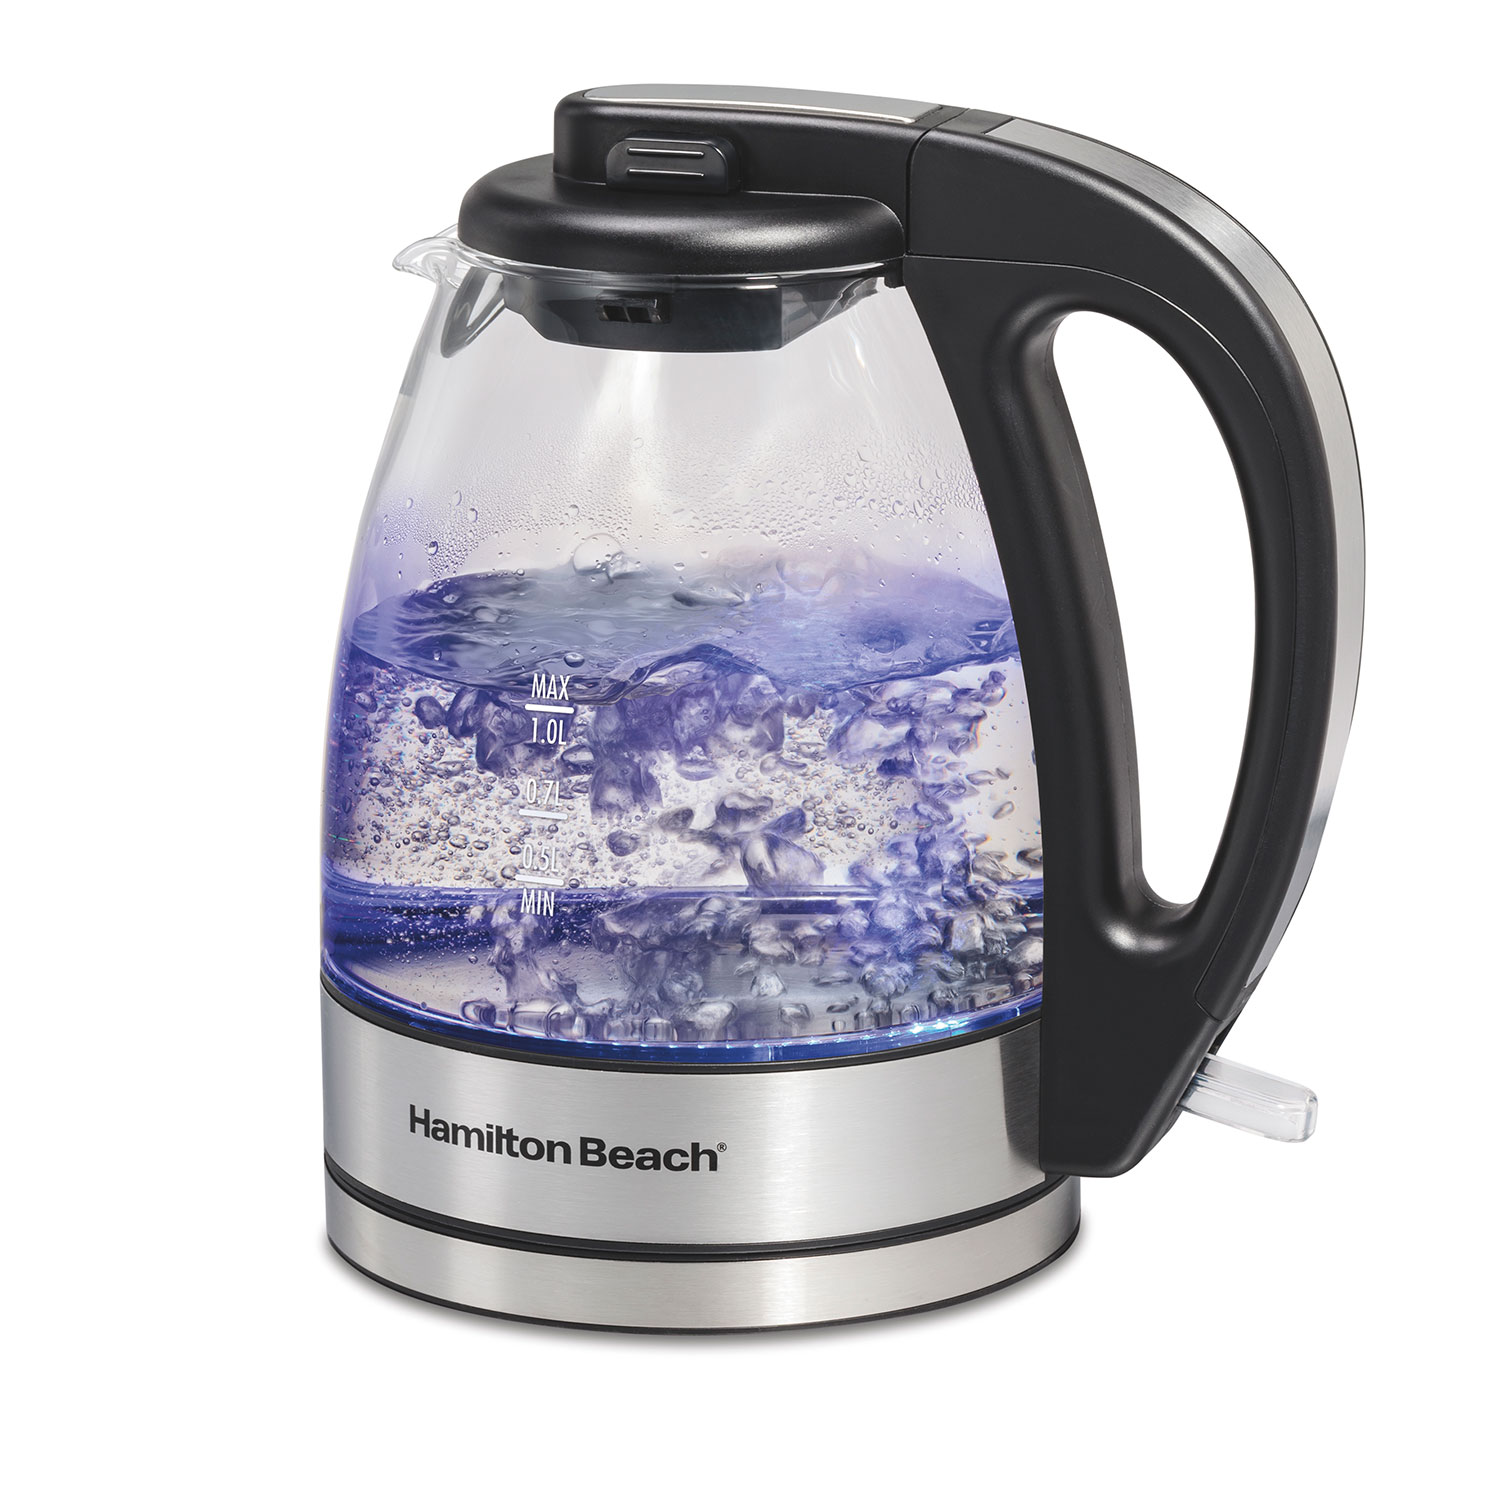 https://www.momjunction.com/wp-content/uploads/product-images/hamilton-beach-glass-electric-tea-kettle-_afl2216.jpg